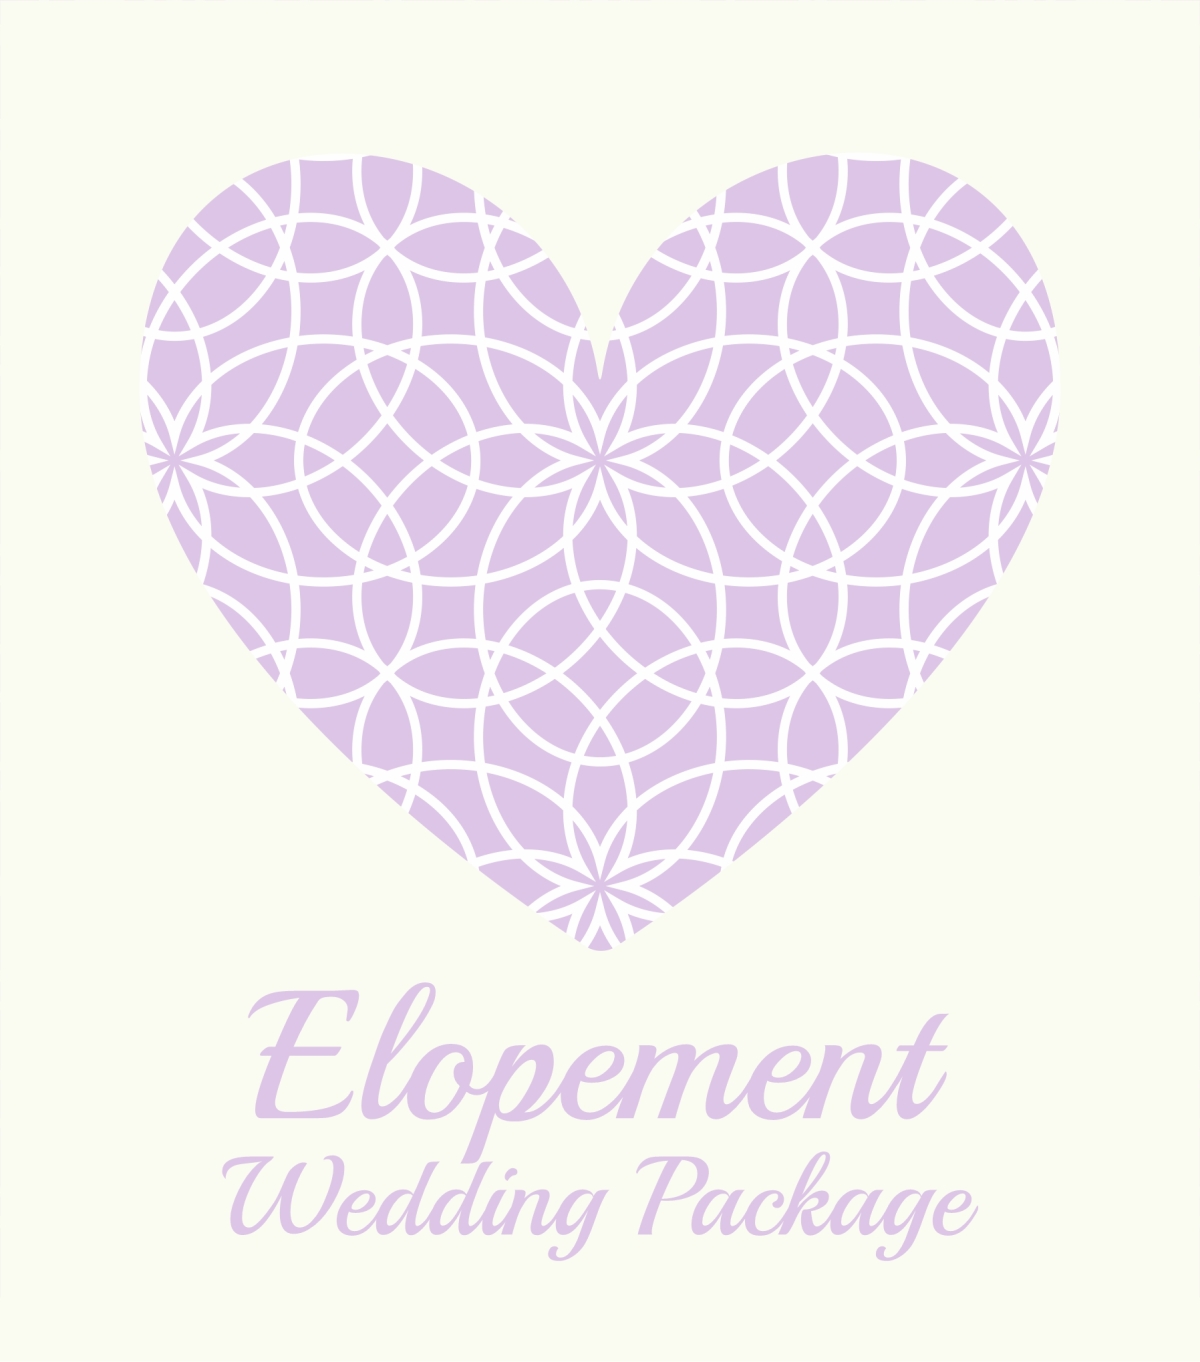 Elopement Wedding Package